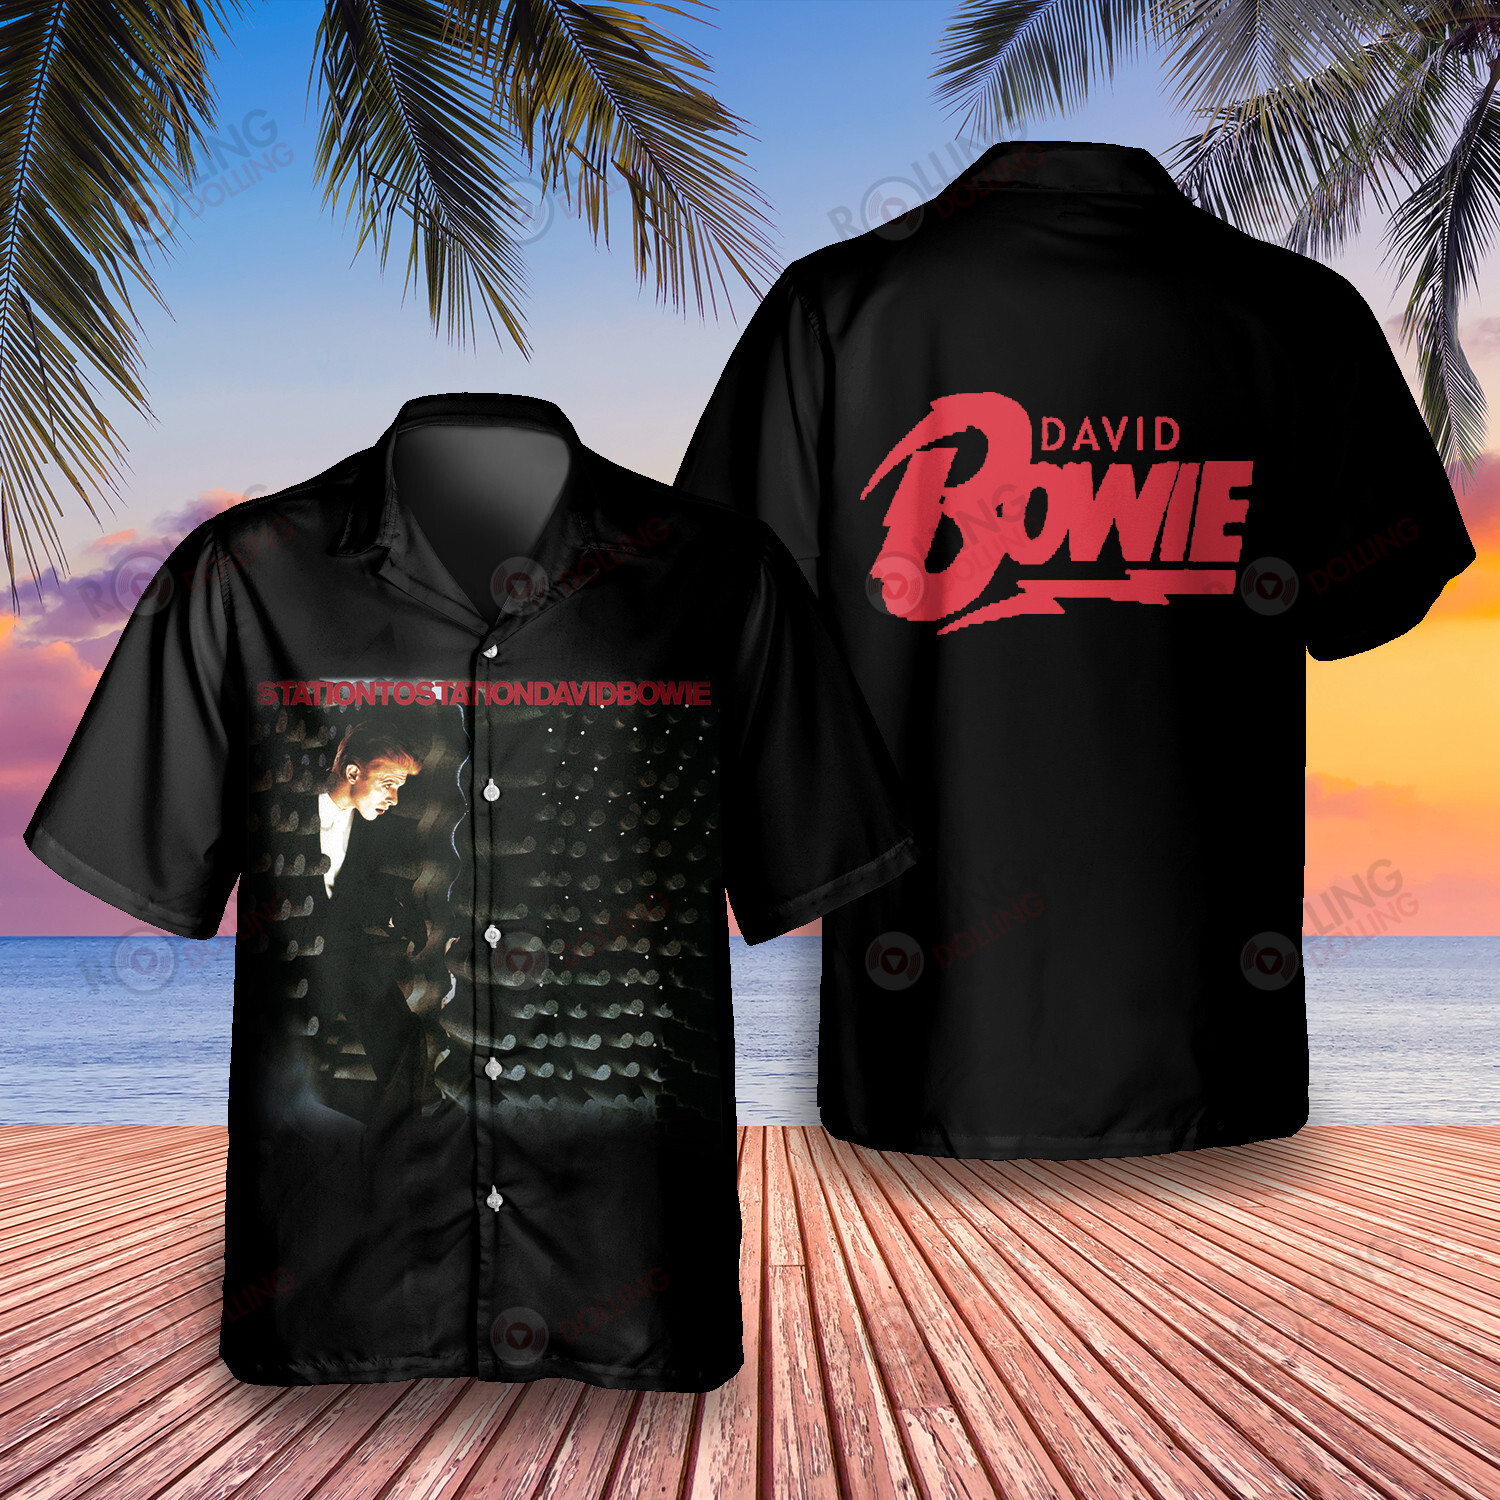 Regardless of their style, you will feel comfortable wearing Hawaiian Shirt 88